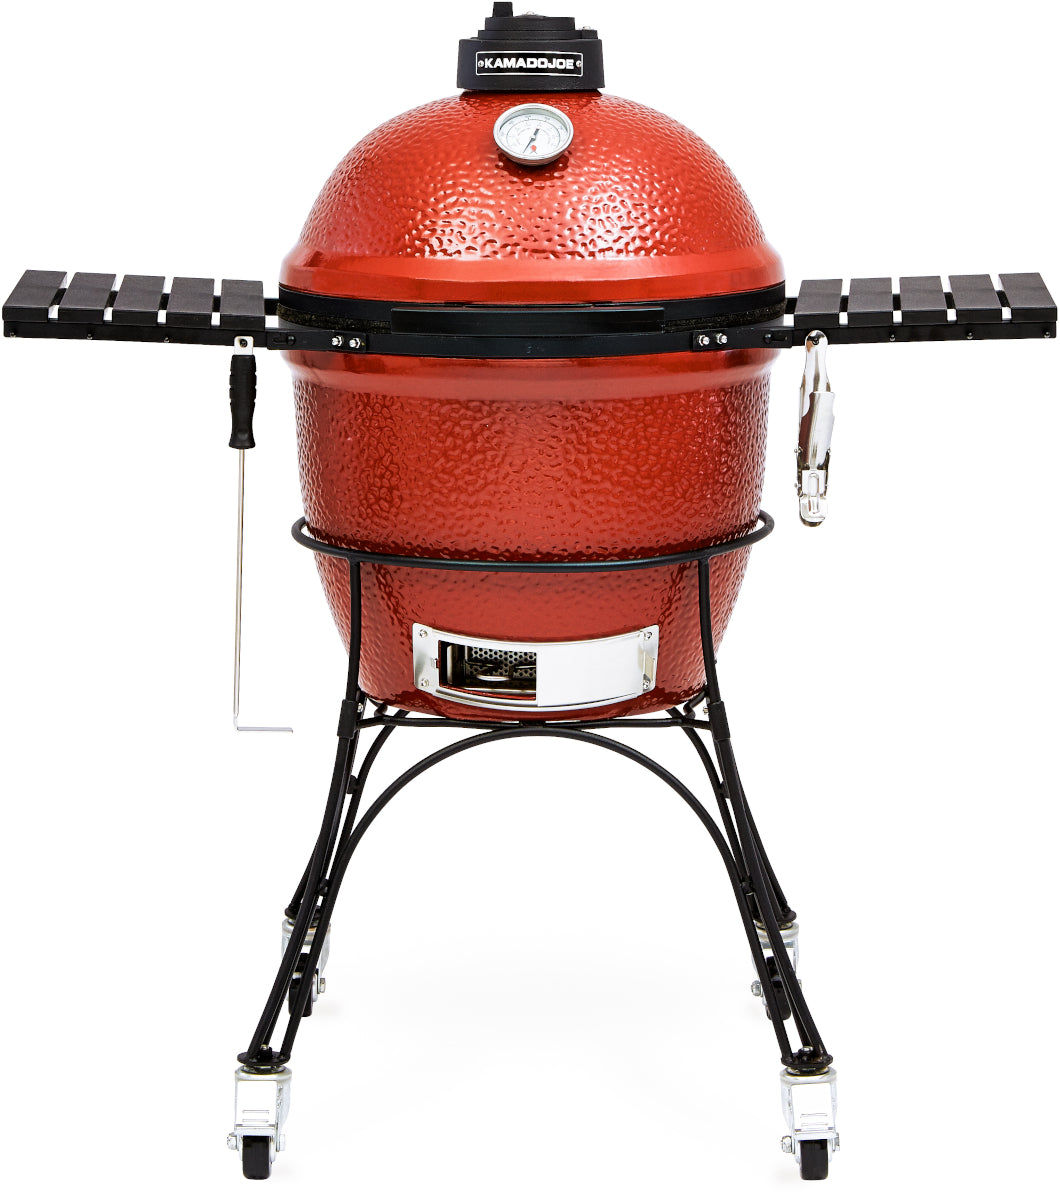 Kamado Joe® Classic I 18 inch Charcoal Grill in Blaze Red